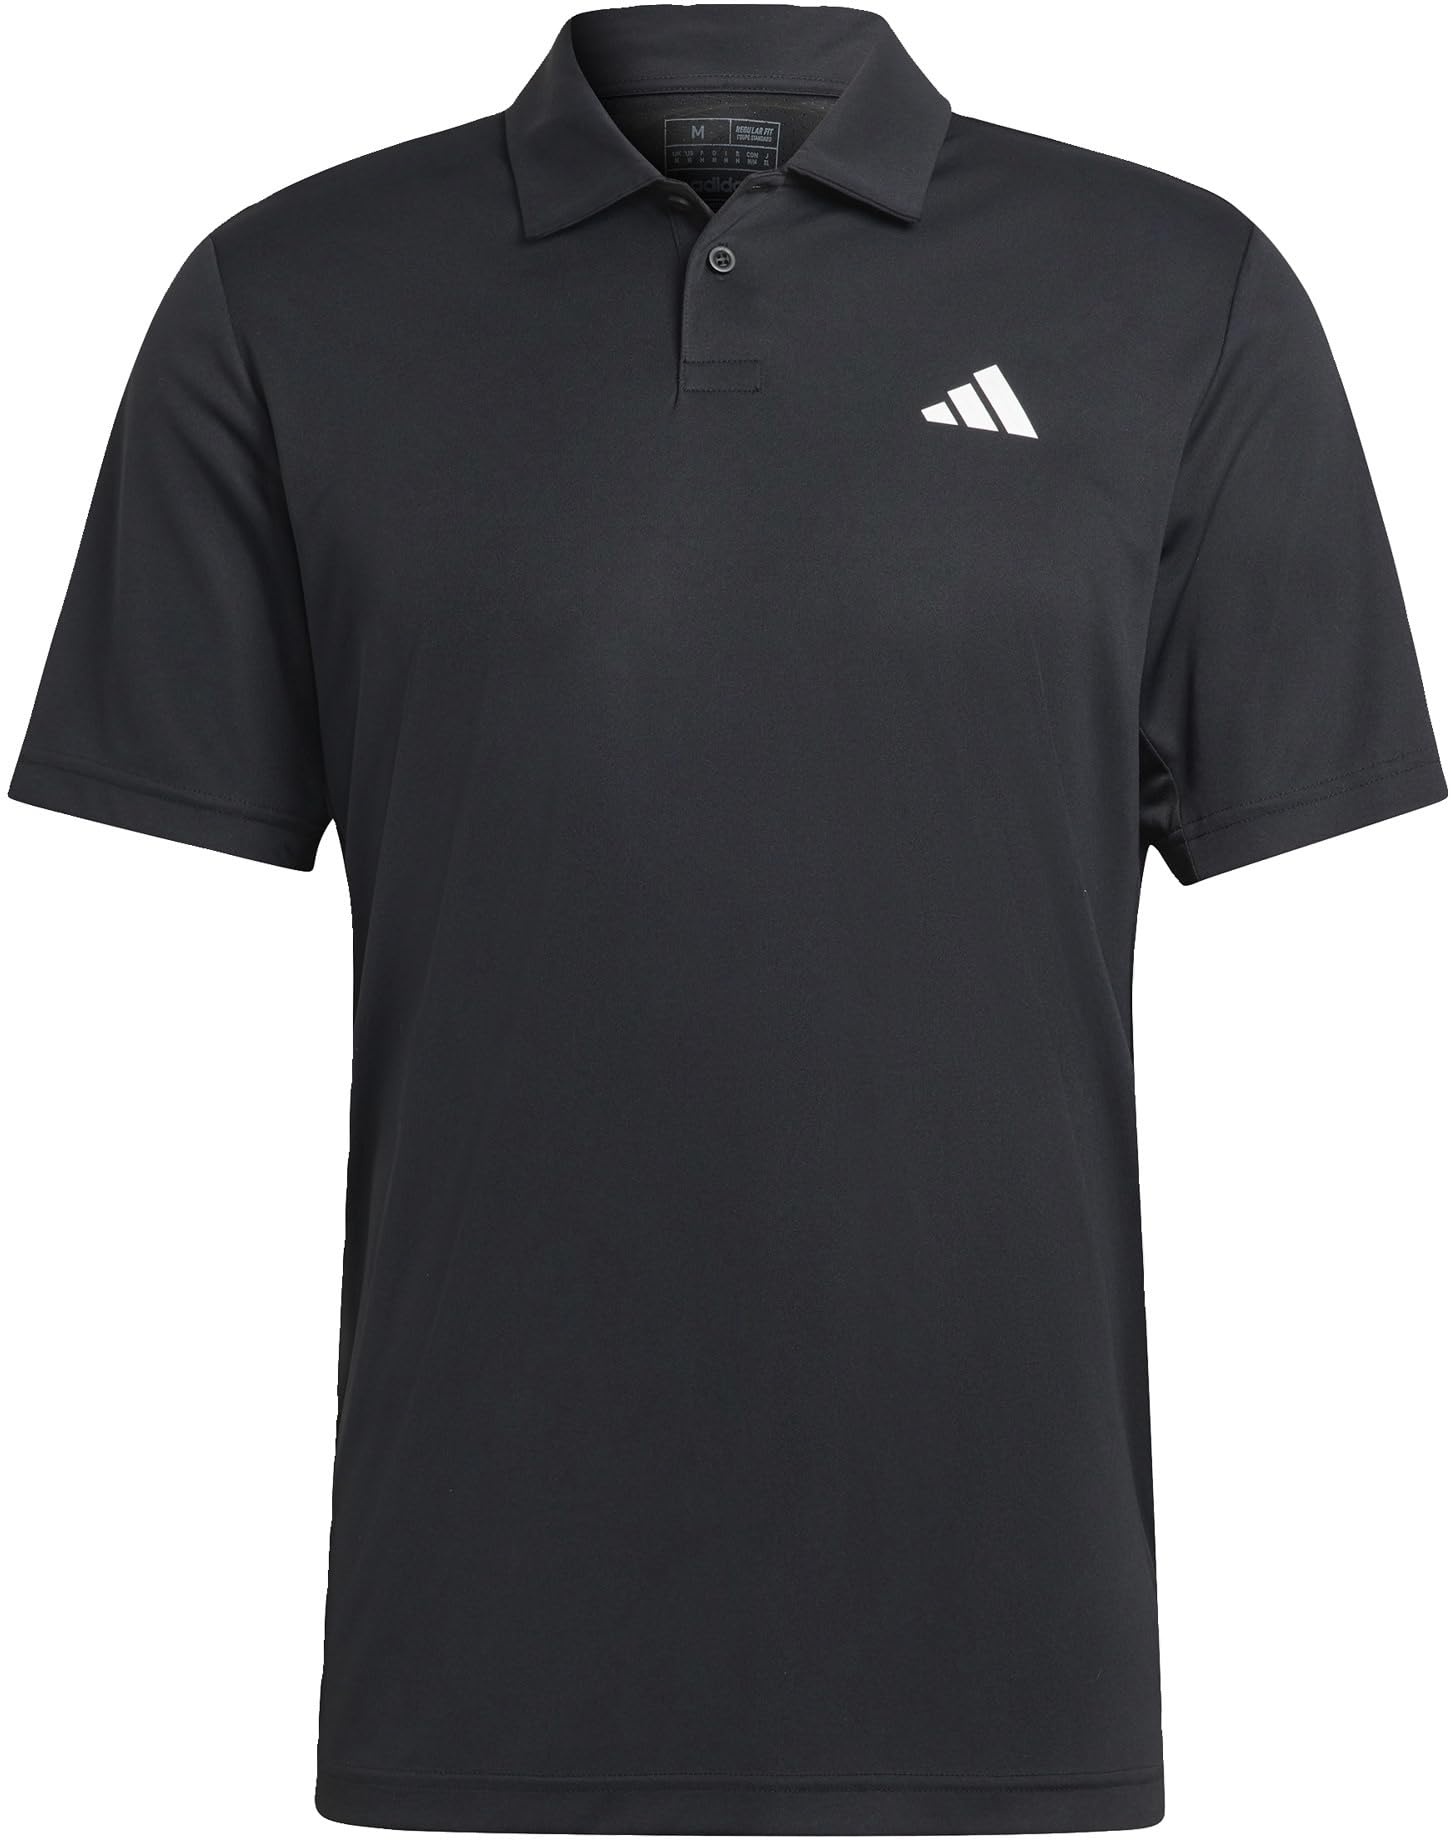 Adidas Herren Polo Shirt (Short Sleeve) Club Polo, Black, HS3278, M